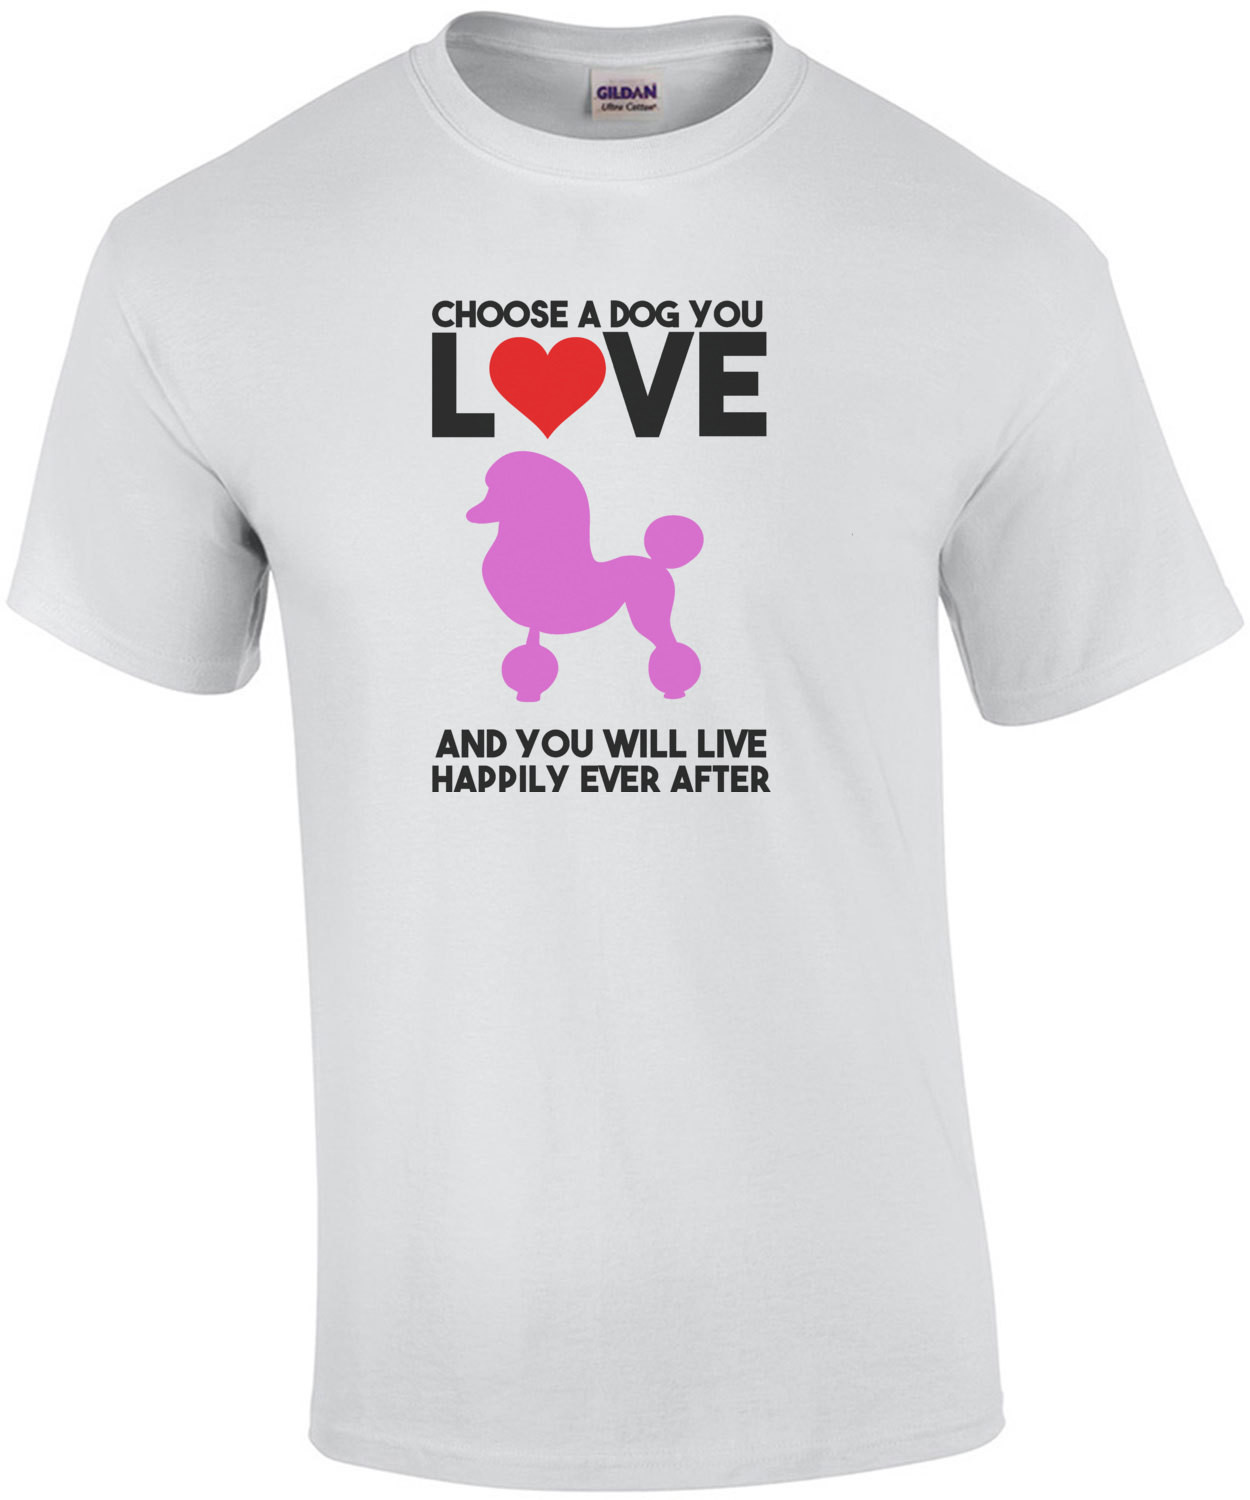 Choose a dog you love - poodle t-shirt